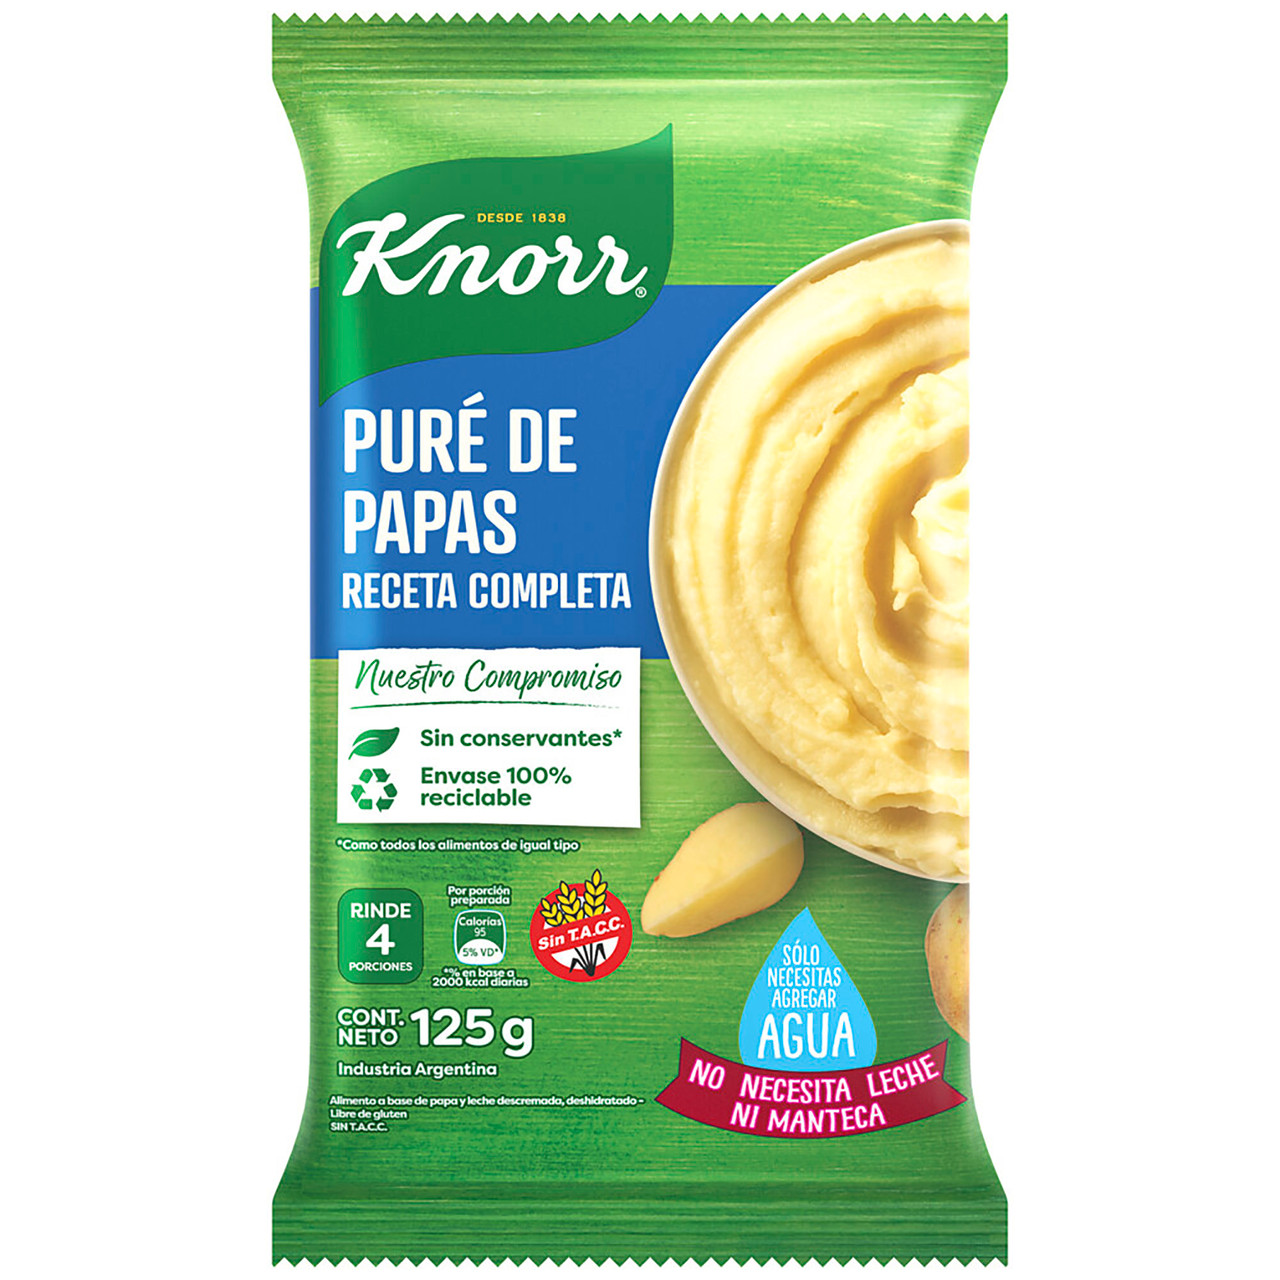 Knorr Puré de Papas Receta Completa Powder Ready To Make Mashed Potatoes  Just Add Water - No